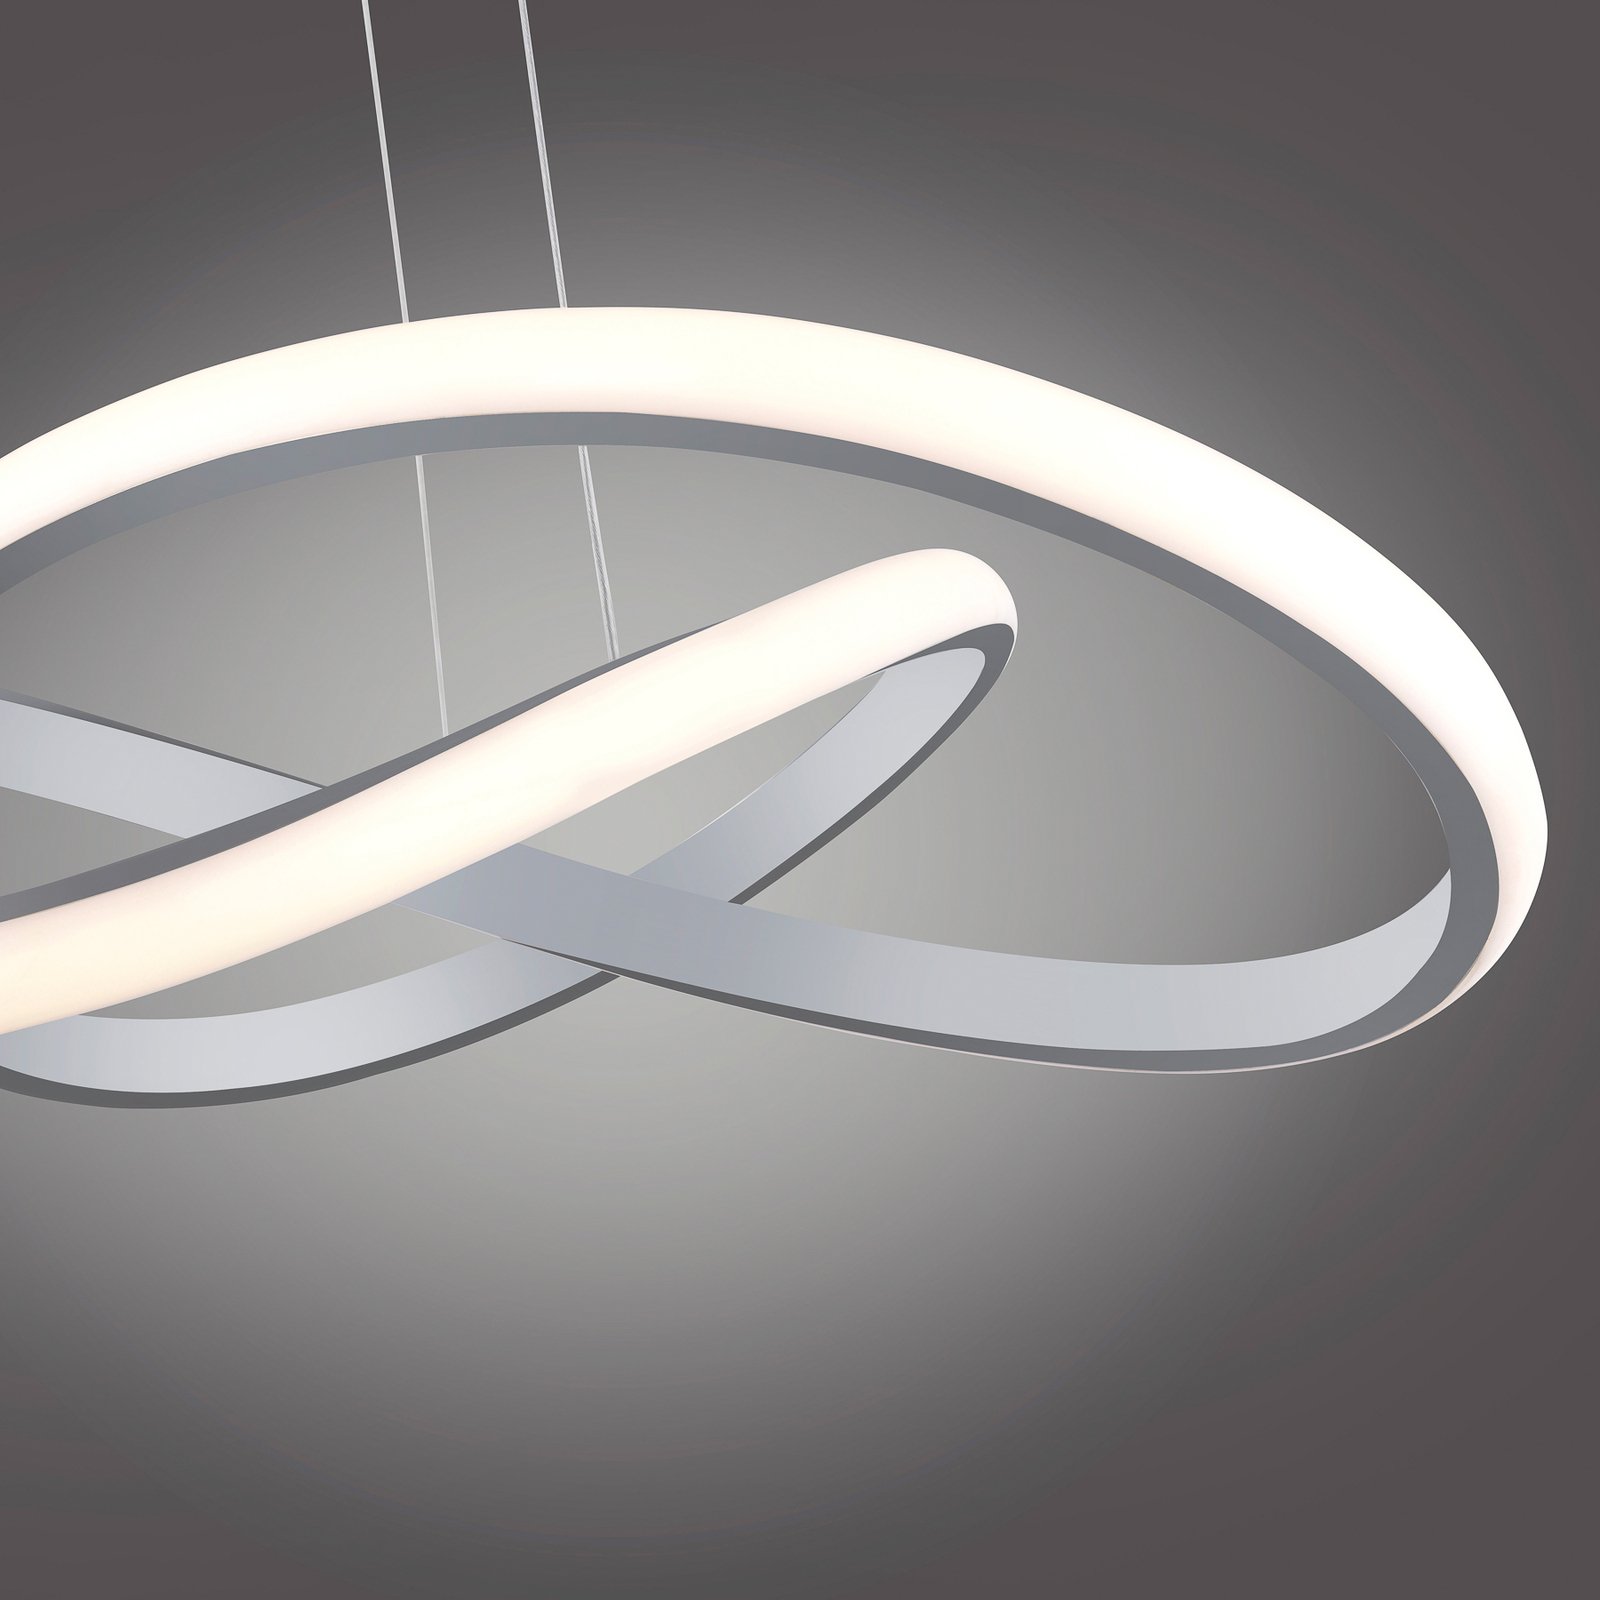 LED pendant light Maria, 3-step dimmable, aluminium